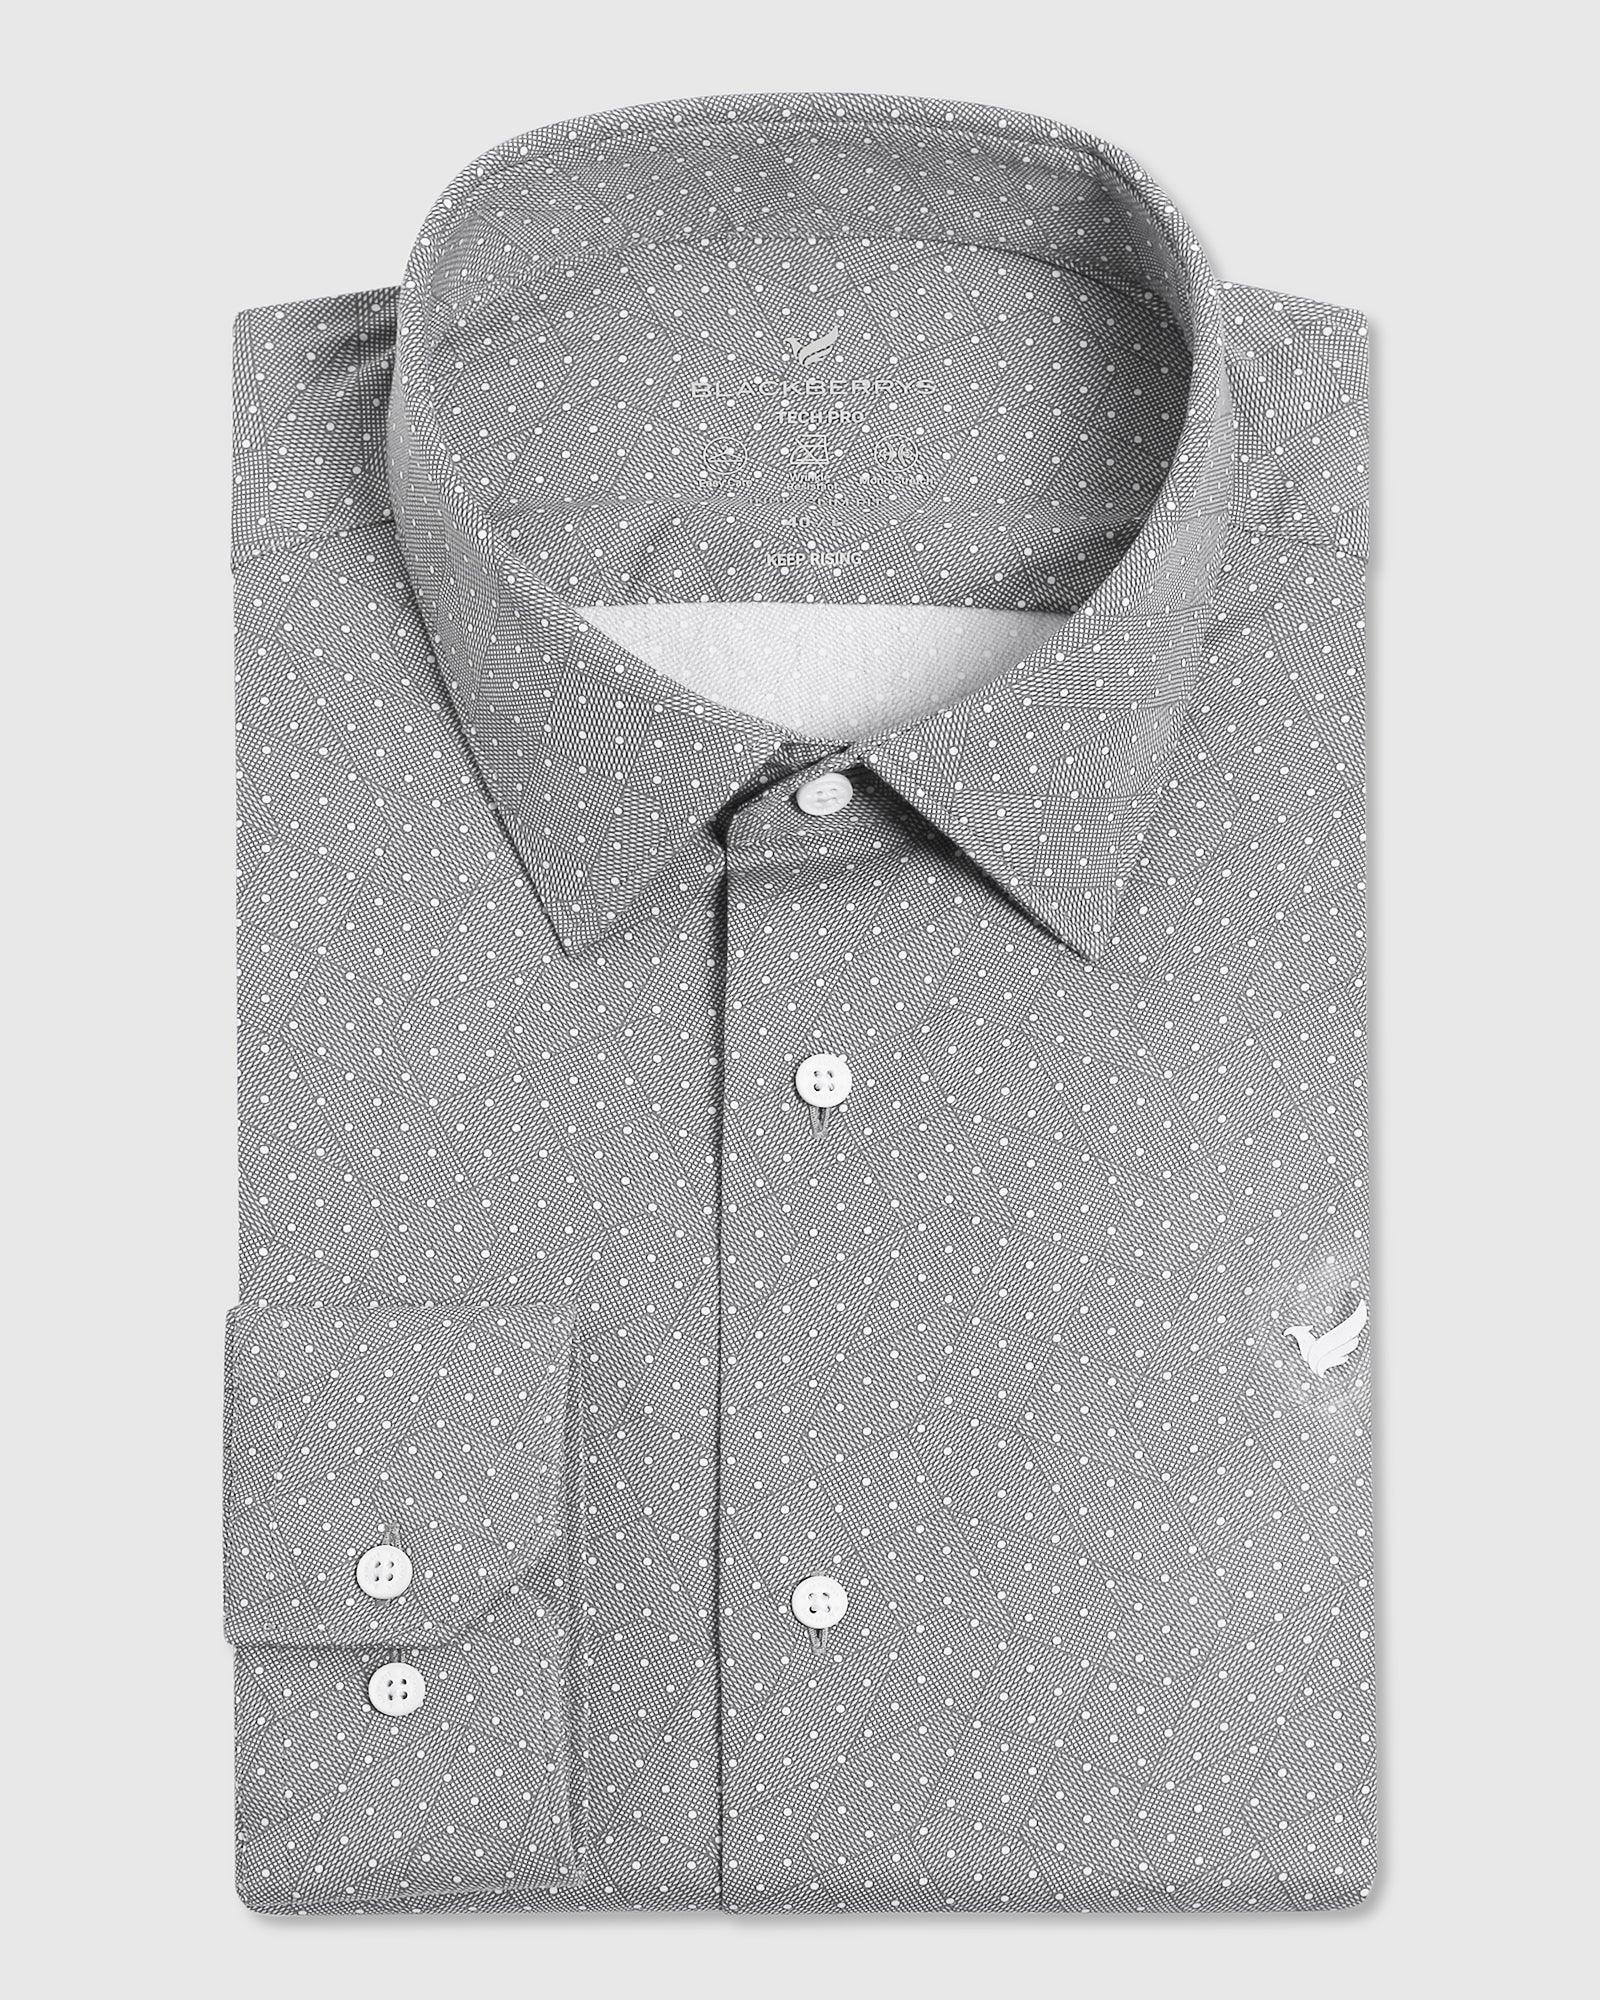 TechPro Formal Grey Printed Shirt - Bradley